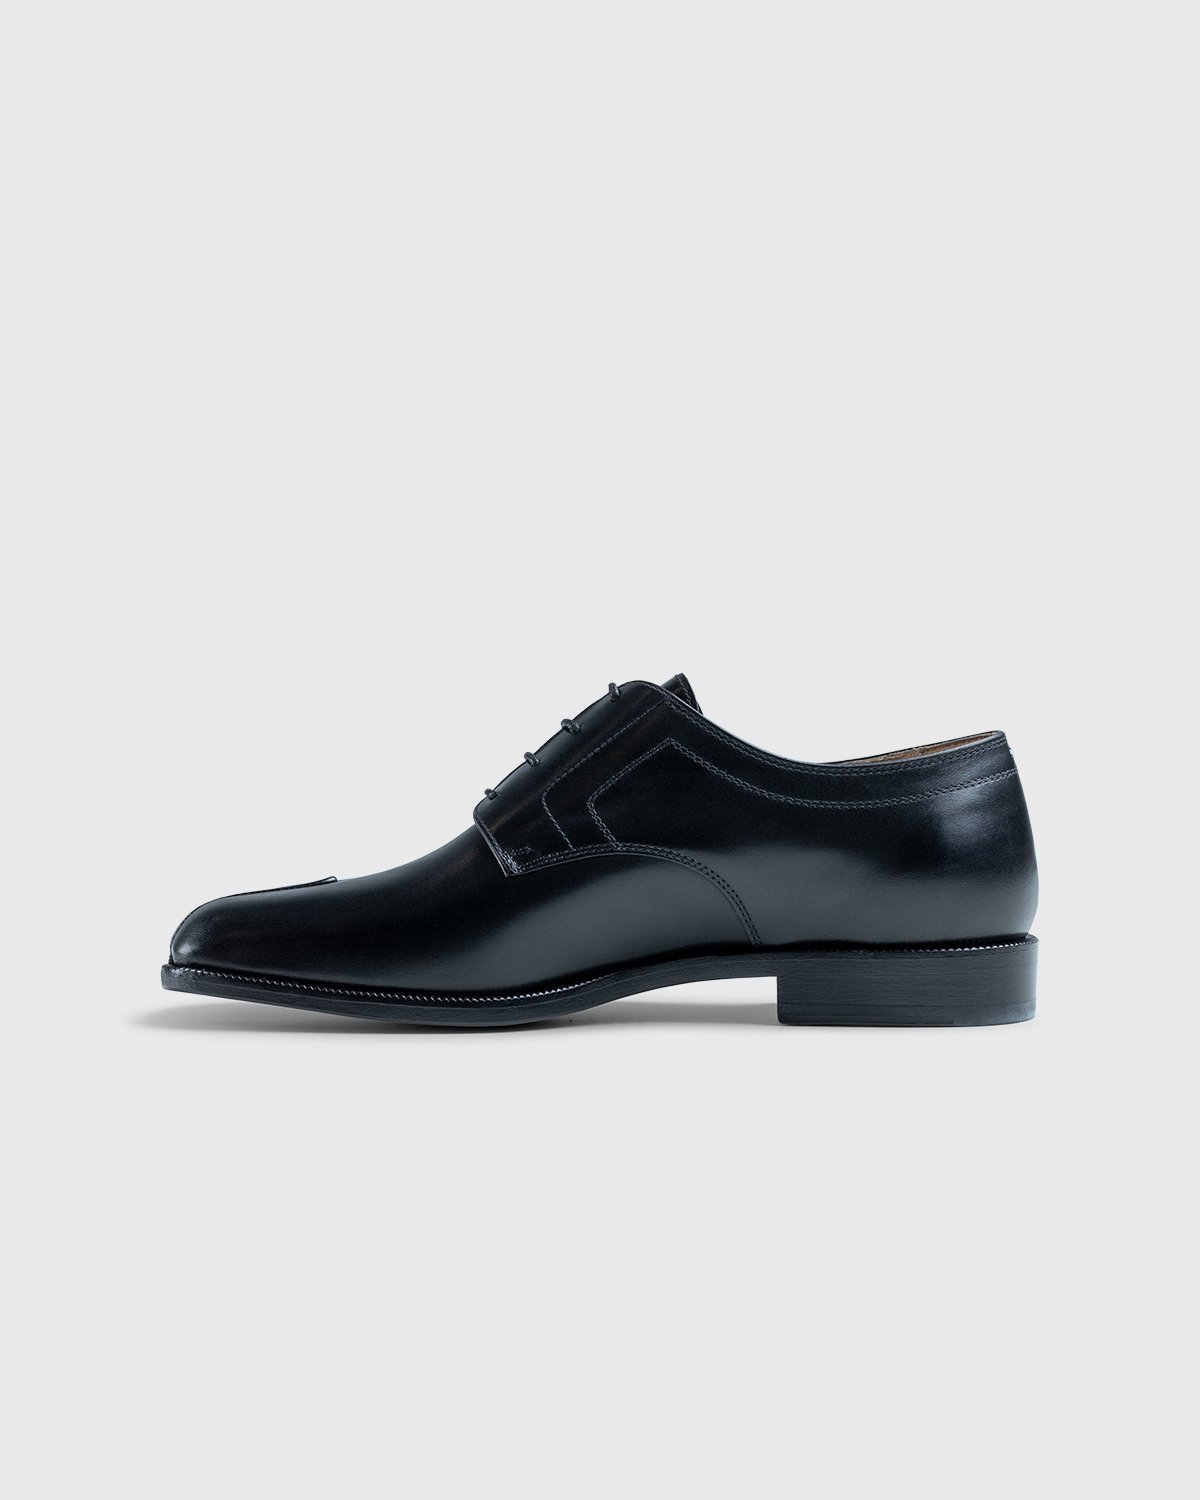 Maison Margiela - Tabi Lace-up Shoes Black - Footwear - Black - Image 7